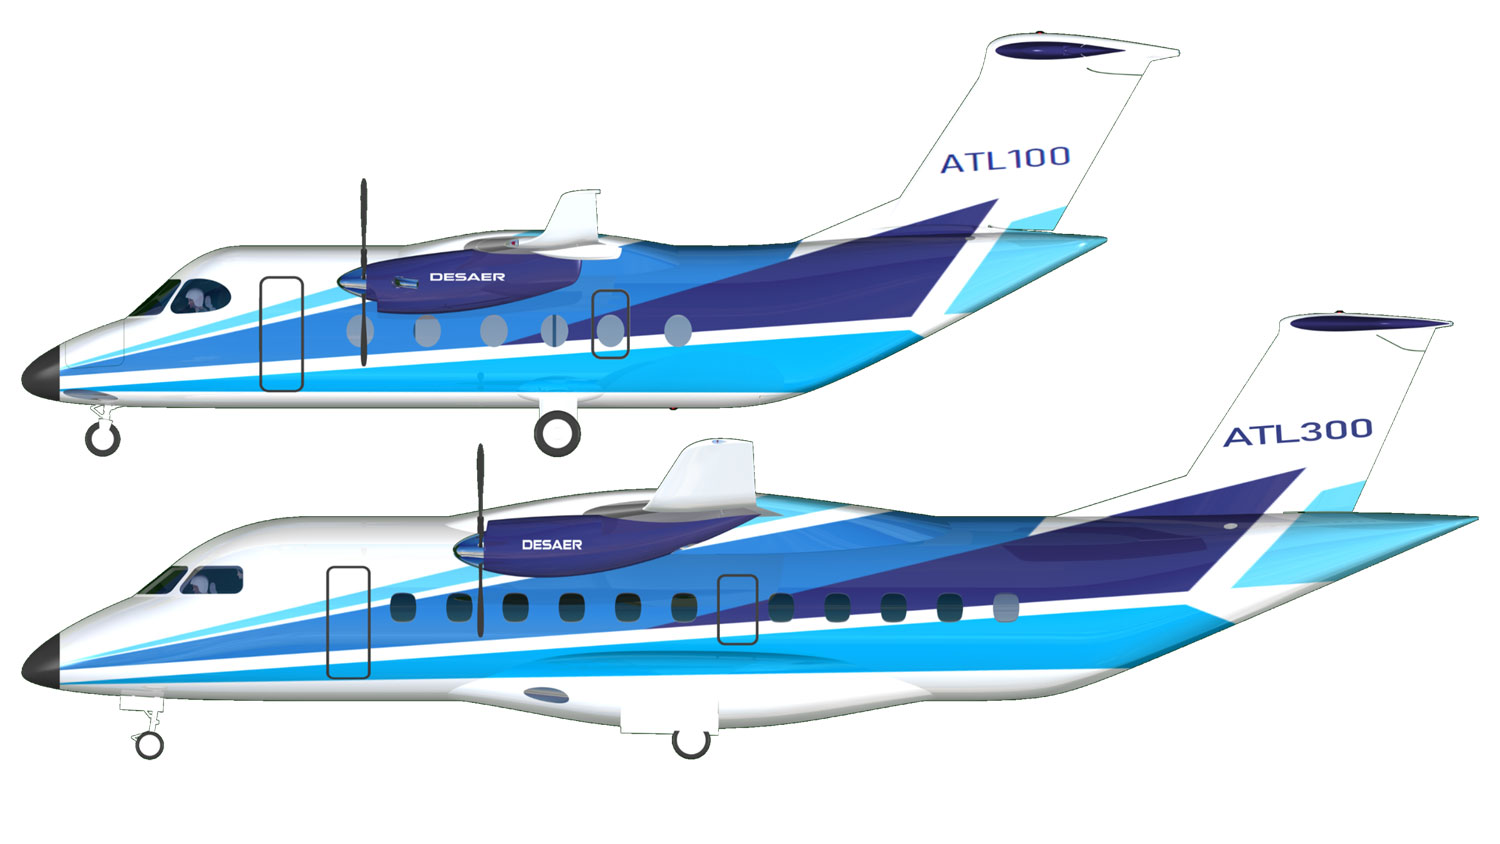 The ATL-300 and the smaller ATL-100 (Desaer) .